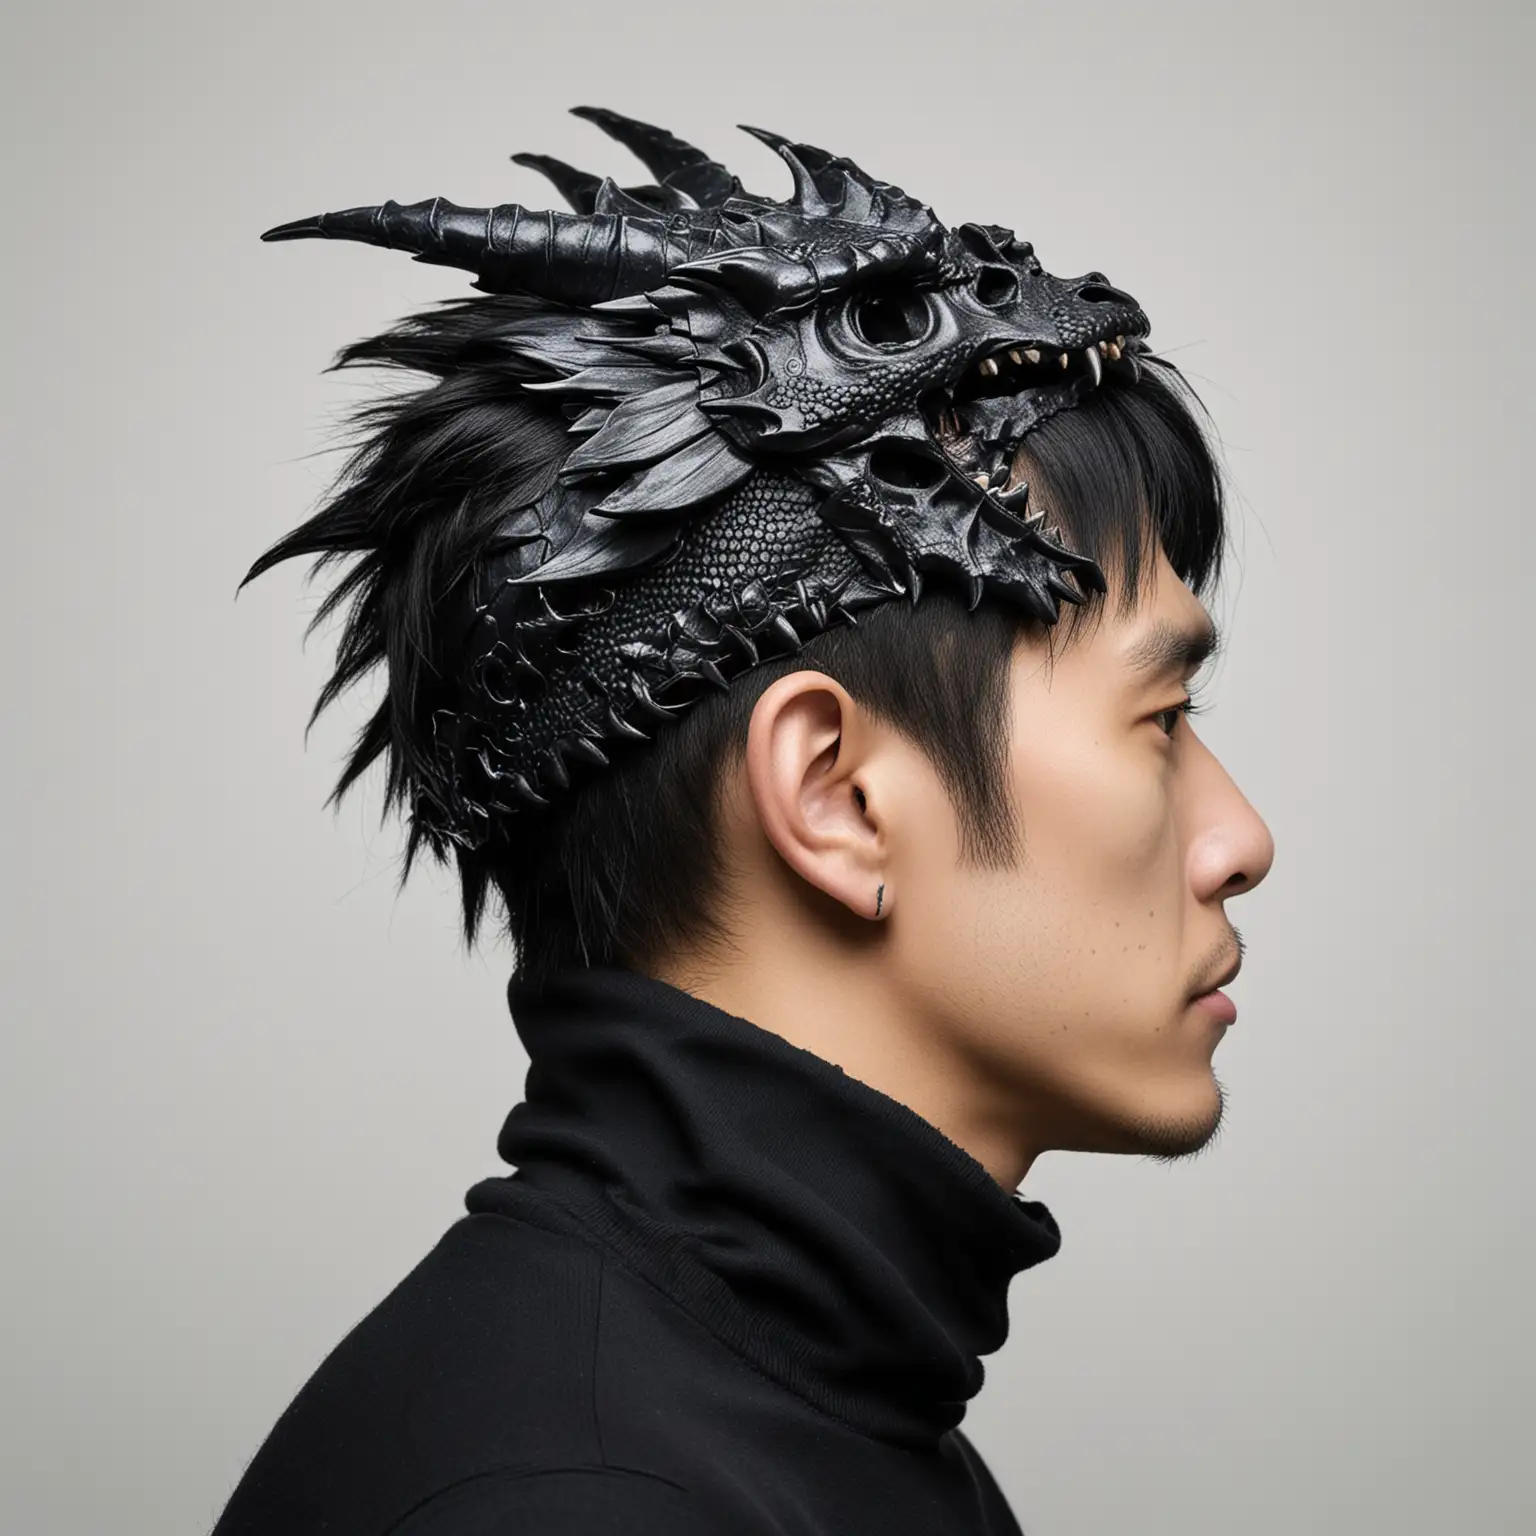 Japanese Man Portrait with Black Metal Dragon Skull Crown